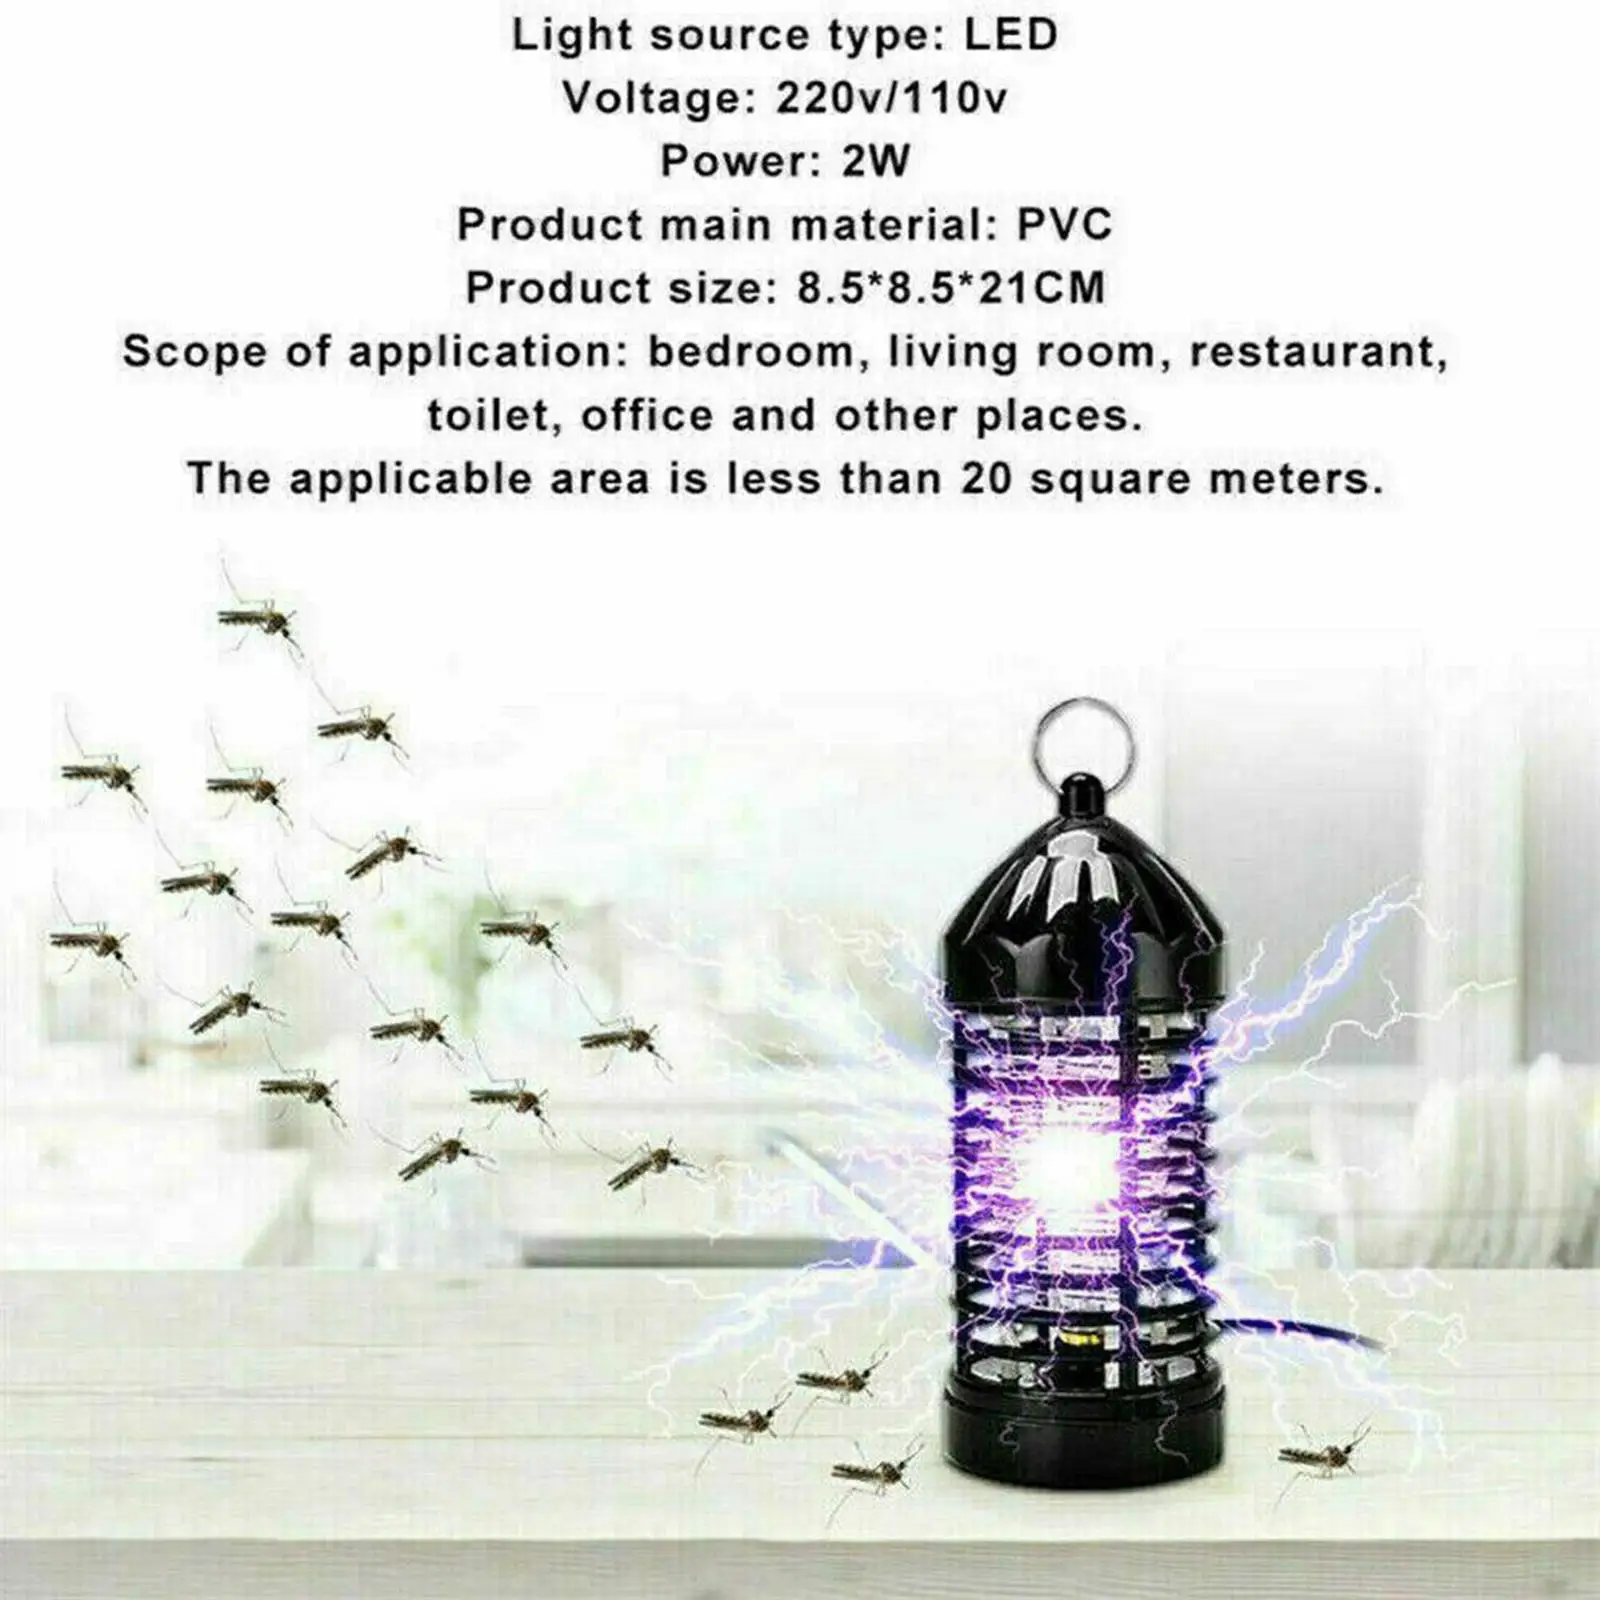 Portable Electric Lamp LED Zapper Trap for Home Bedroom Living Room Backyard Stock Farm